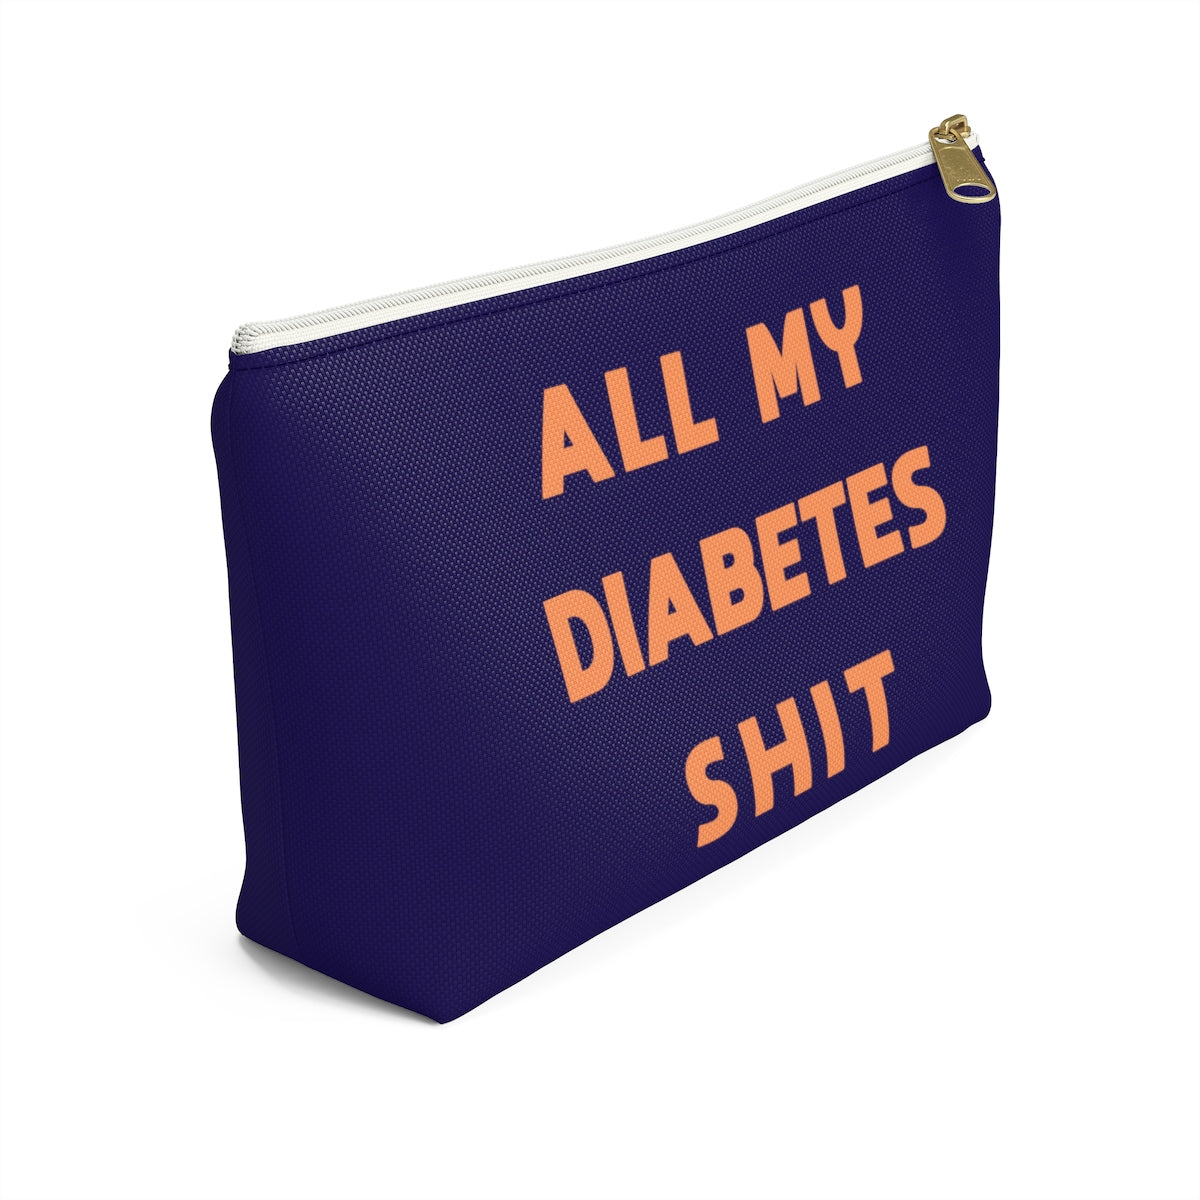 All My Diabetes Shit Bag, Fun Diabetic Supply Case, Cute Bag Gift, Type 1 diabetes, Accessory Zipper Pouch Bag w T-bottom Starcove Fashion